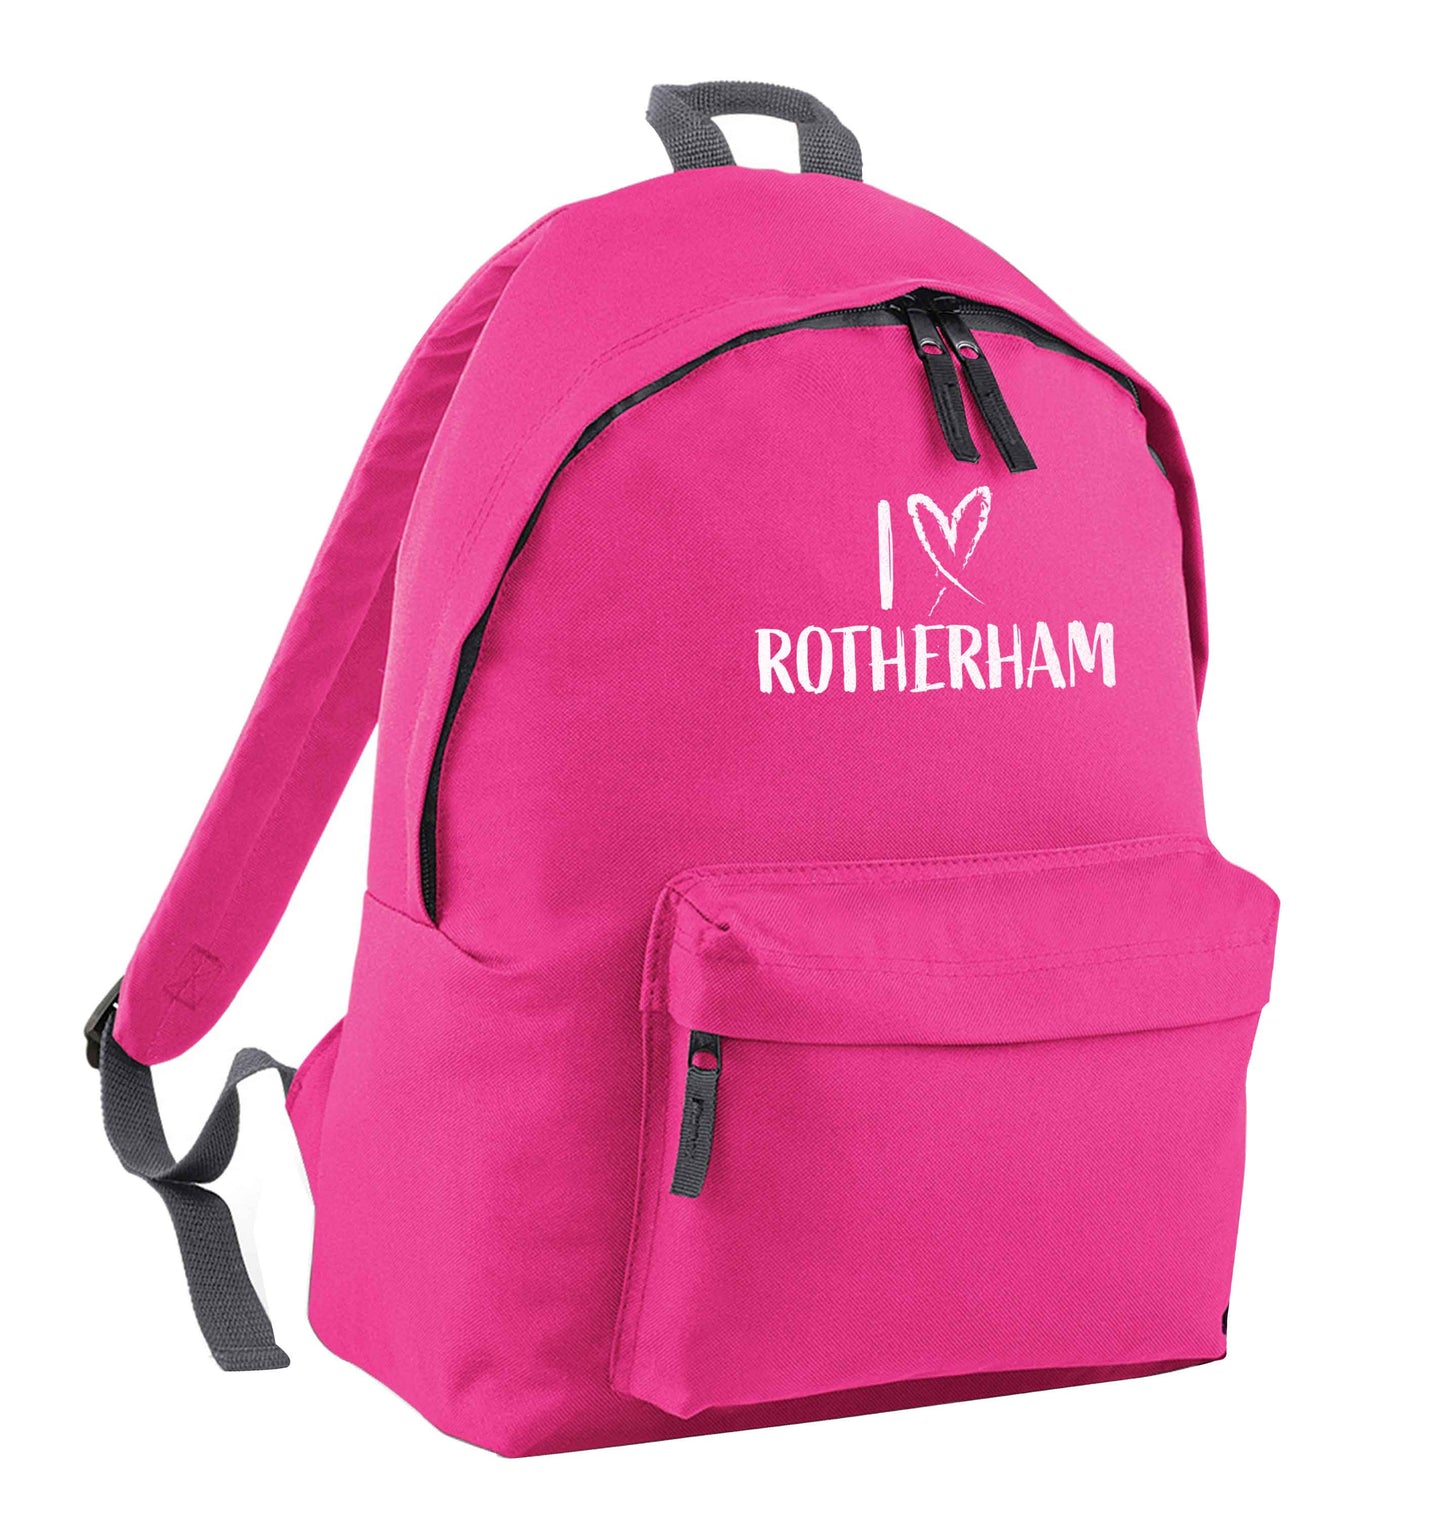 I love Rotherham pink children's backpack